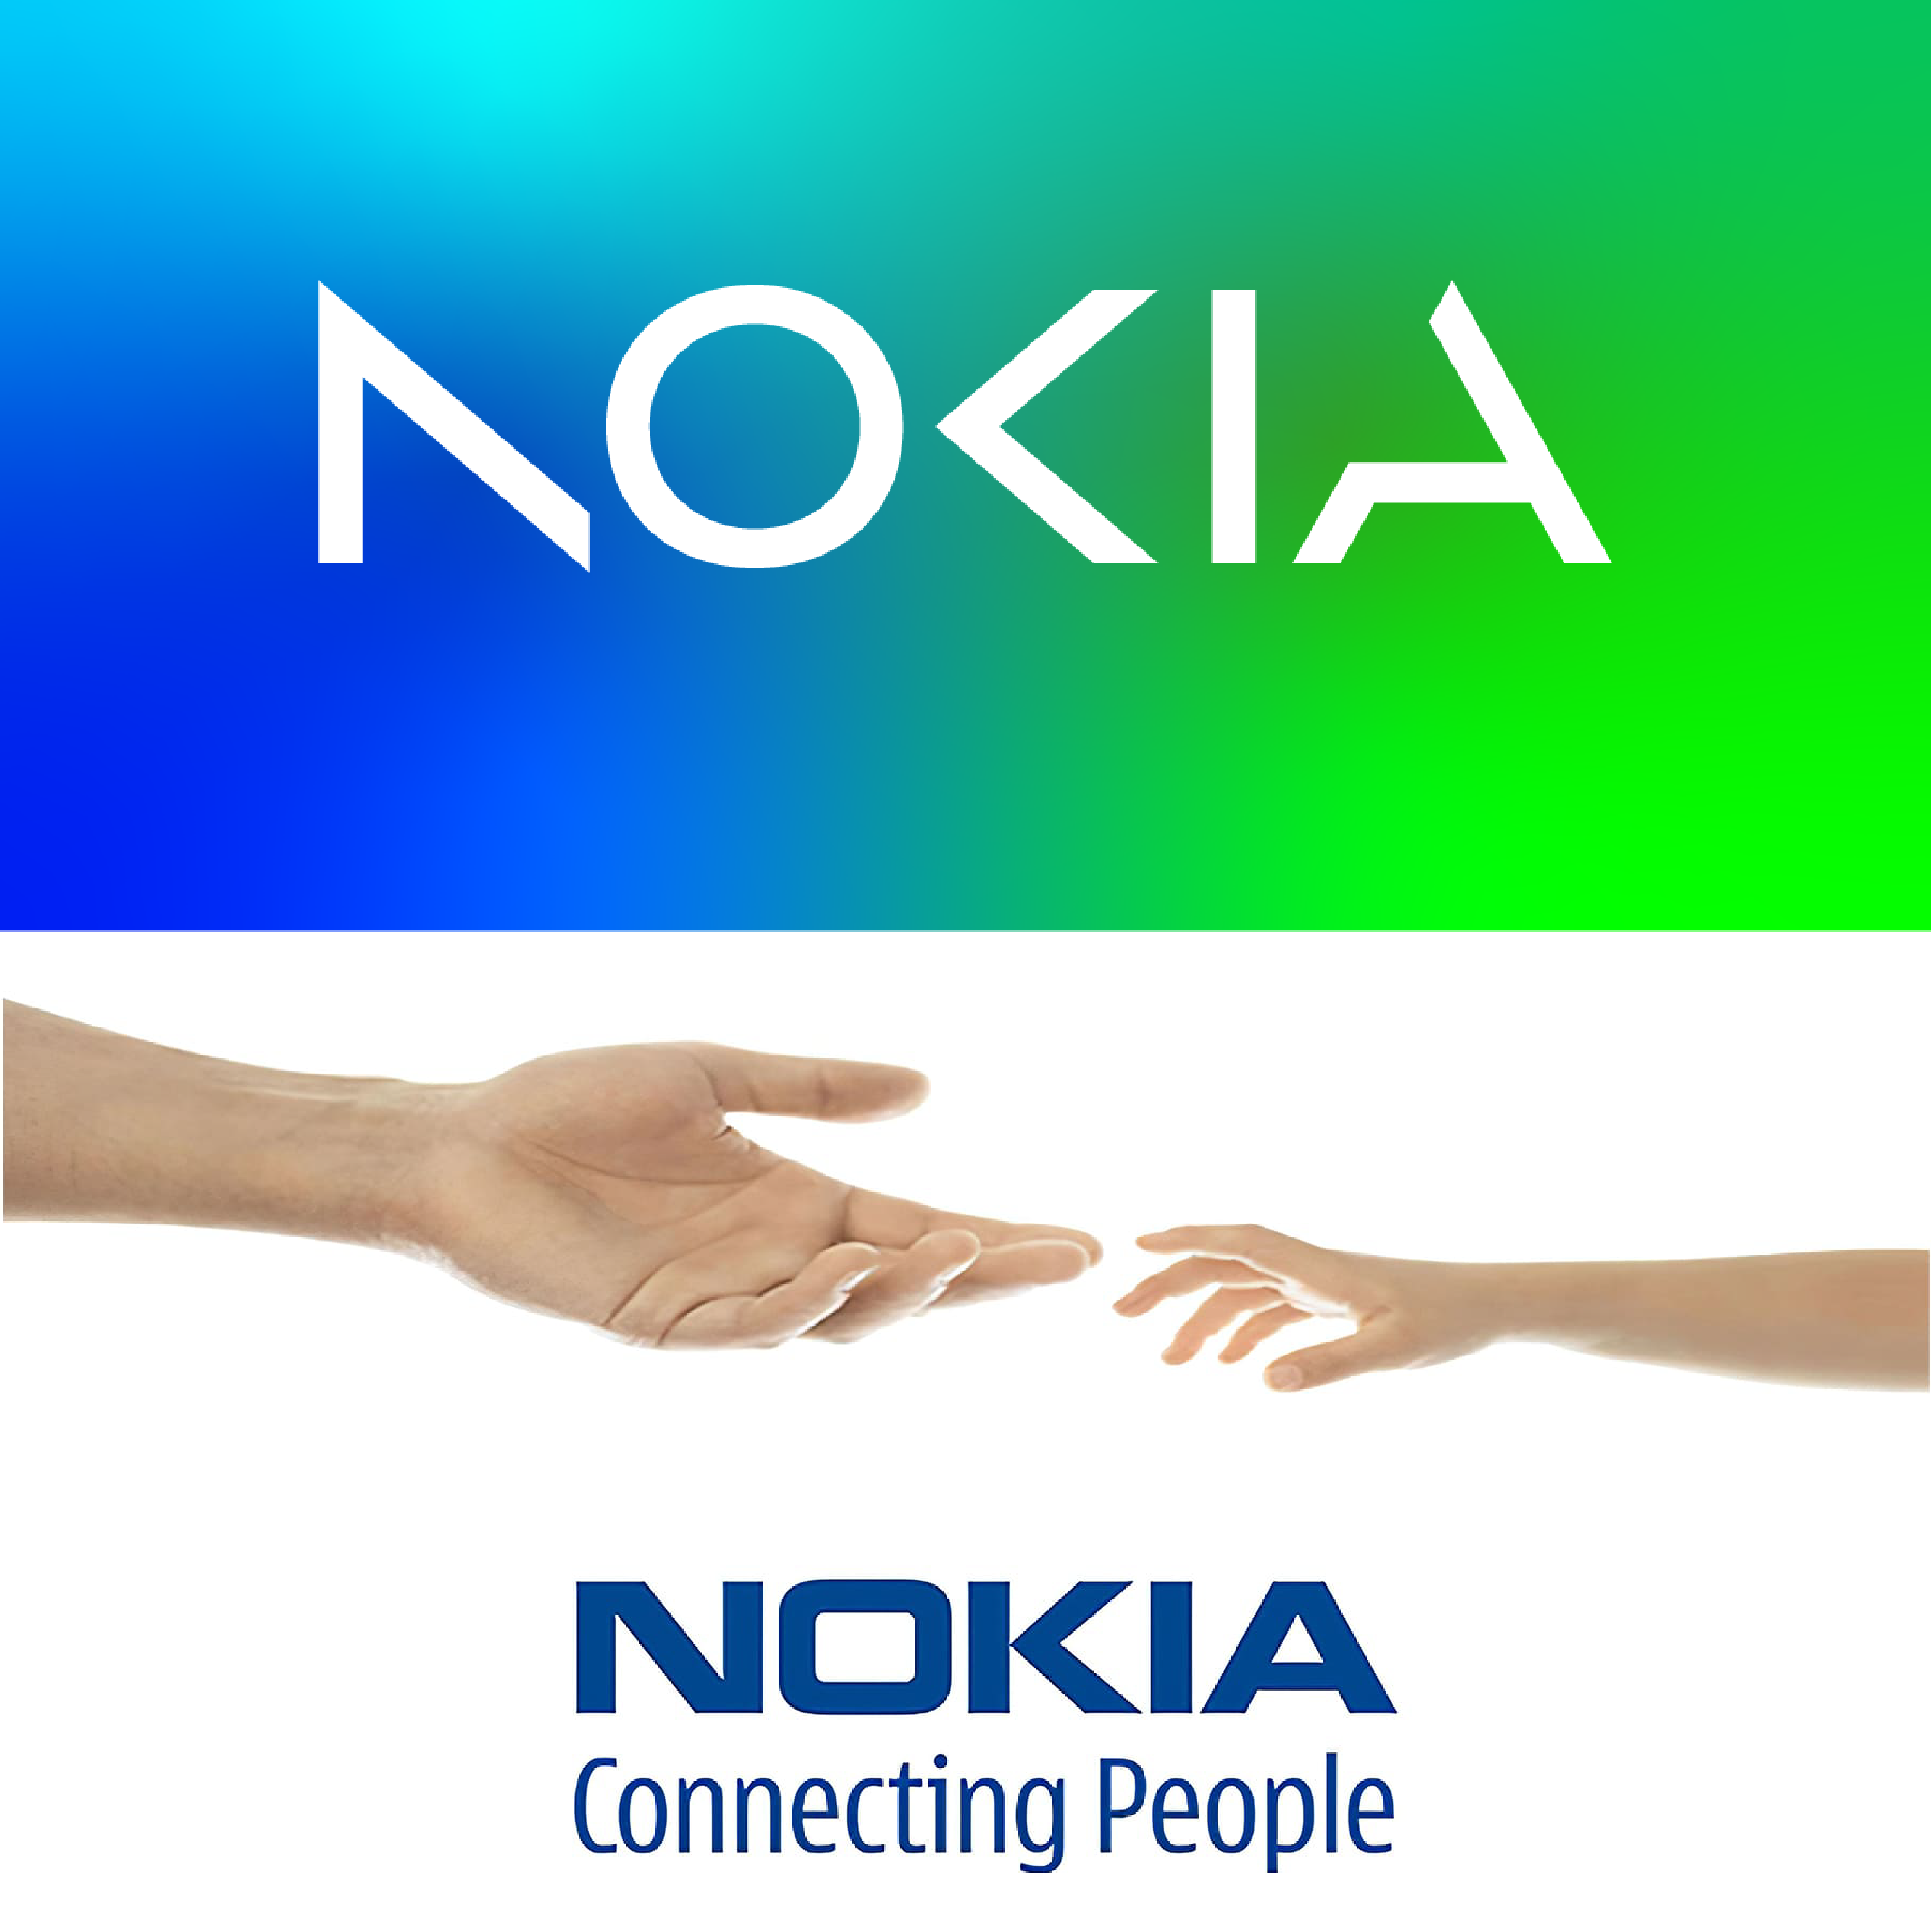 Nokia Case Study, typography, branding, Nokia